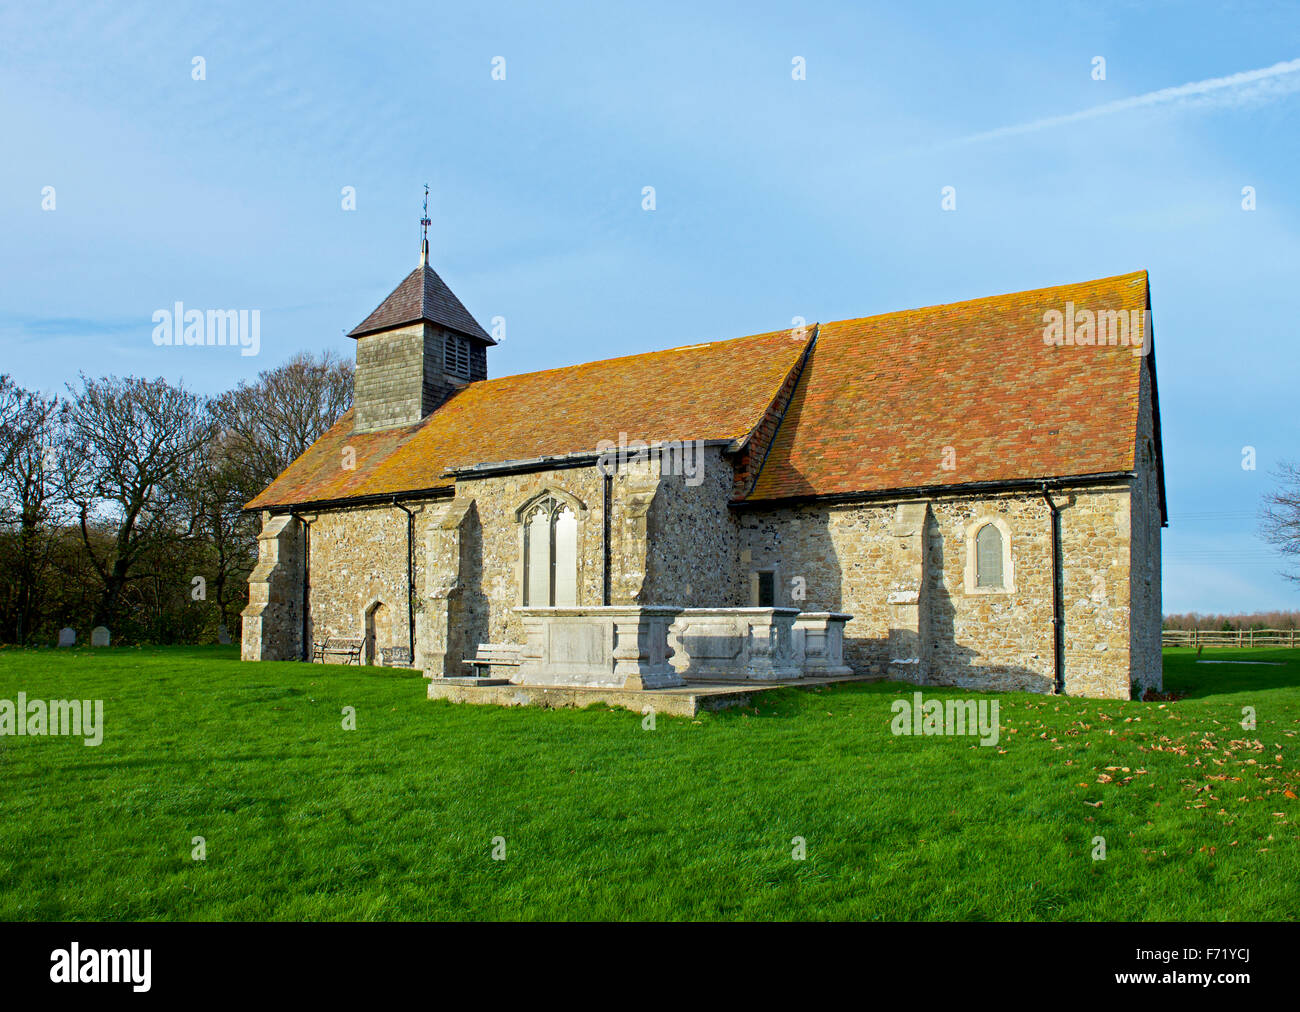 The Church of St Thomas the Apostle, Harty, Isle of Sheppey, Kent, England UK Stock Photo